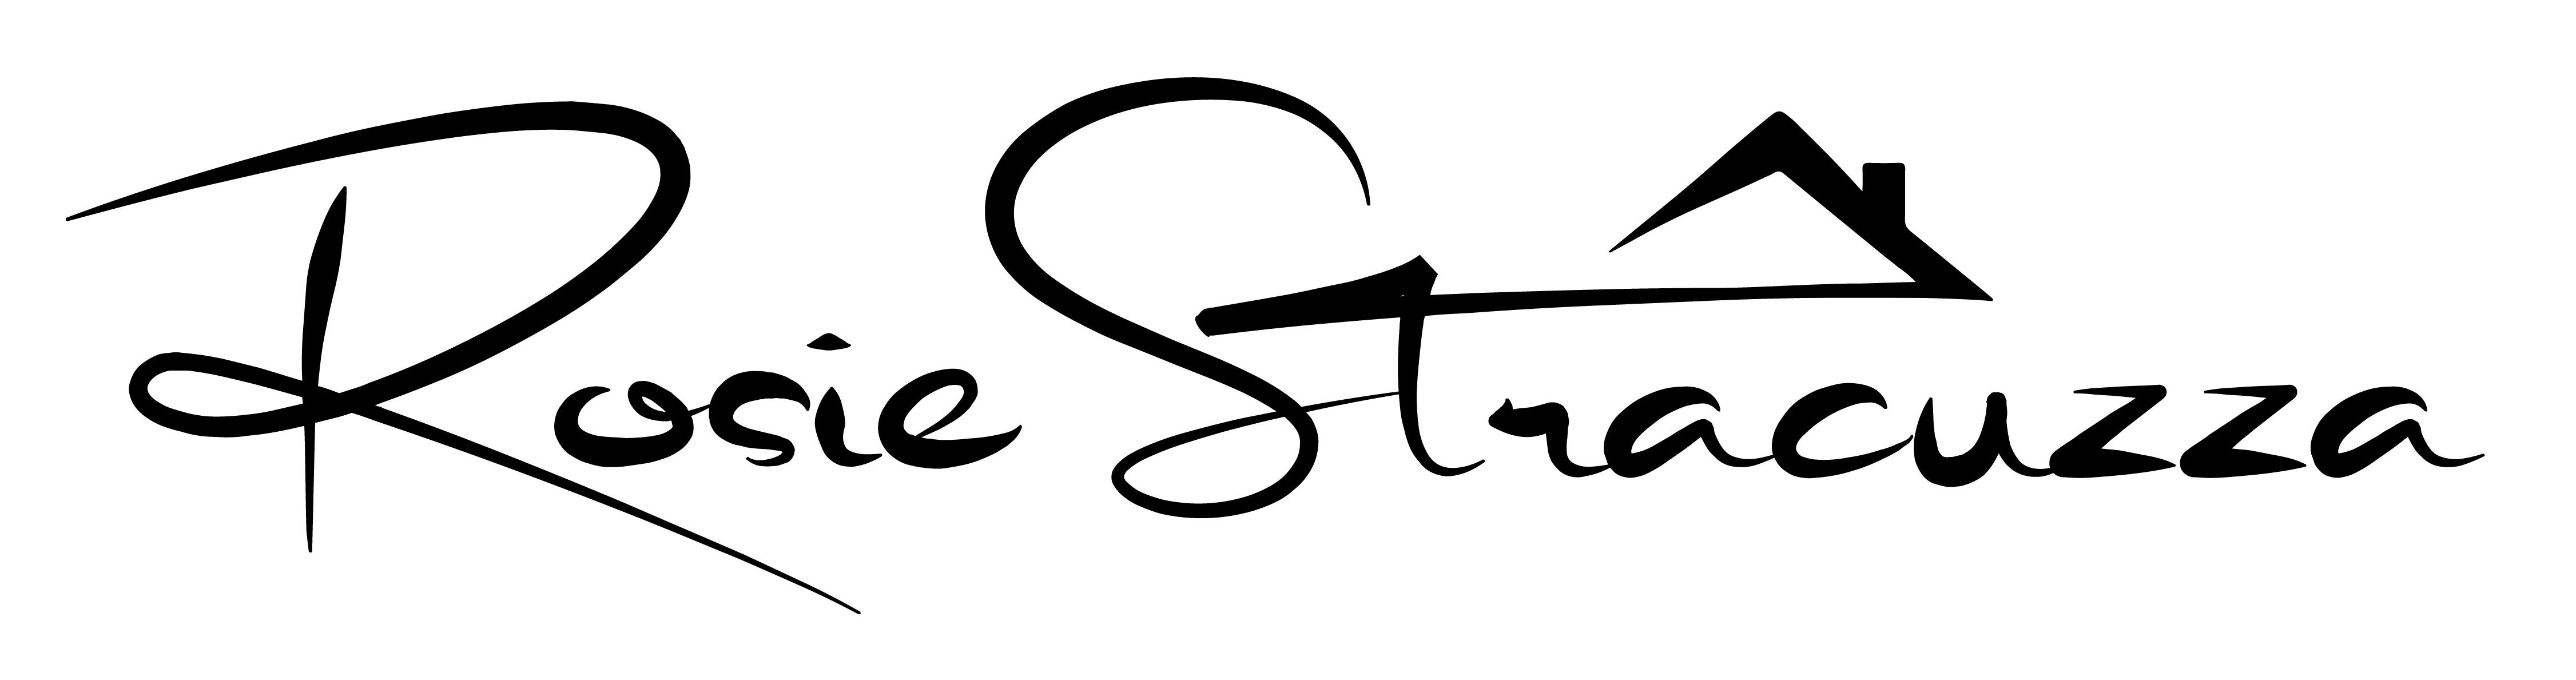 Rosie Stracuzza Real Estate Agent London Ontario Logo